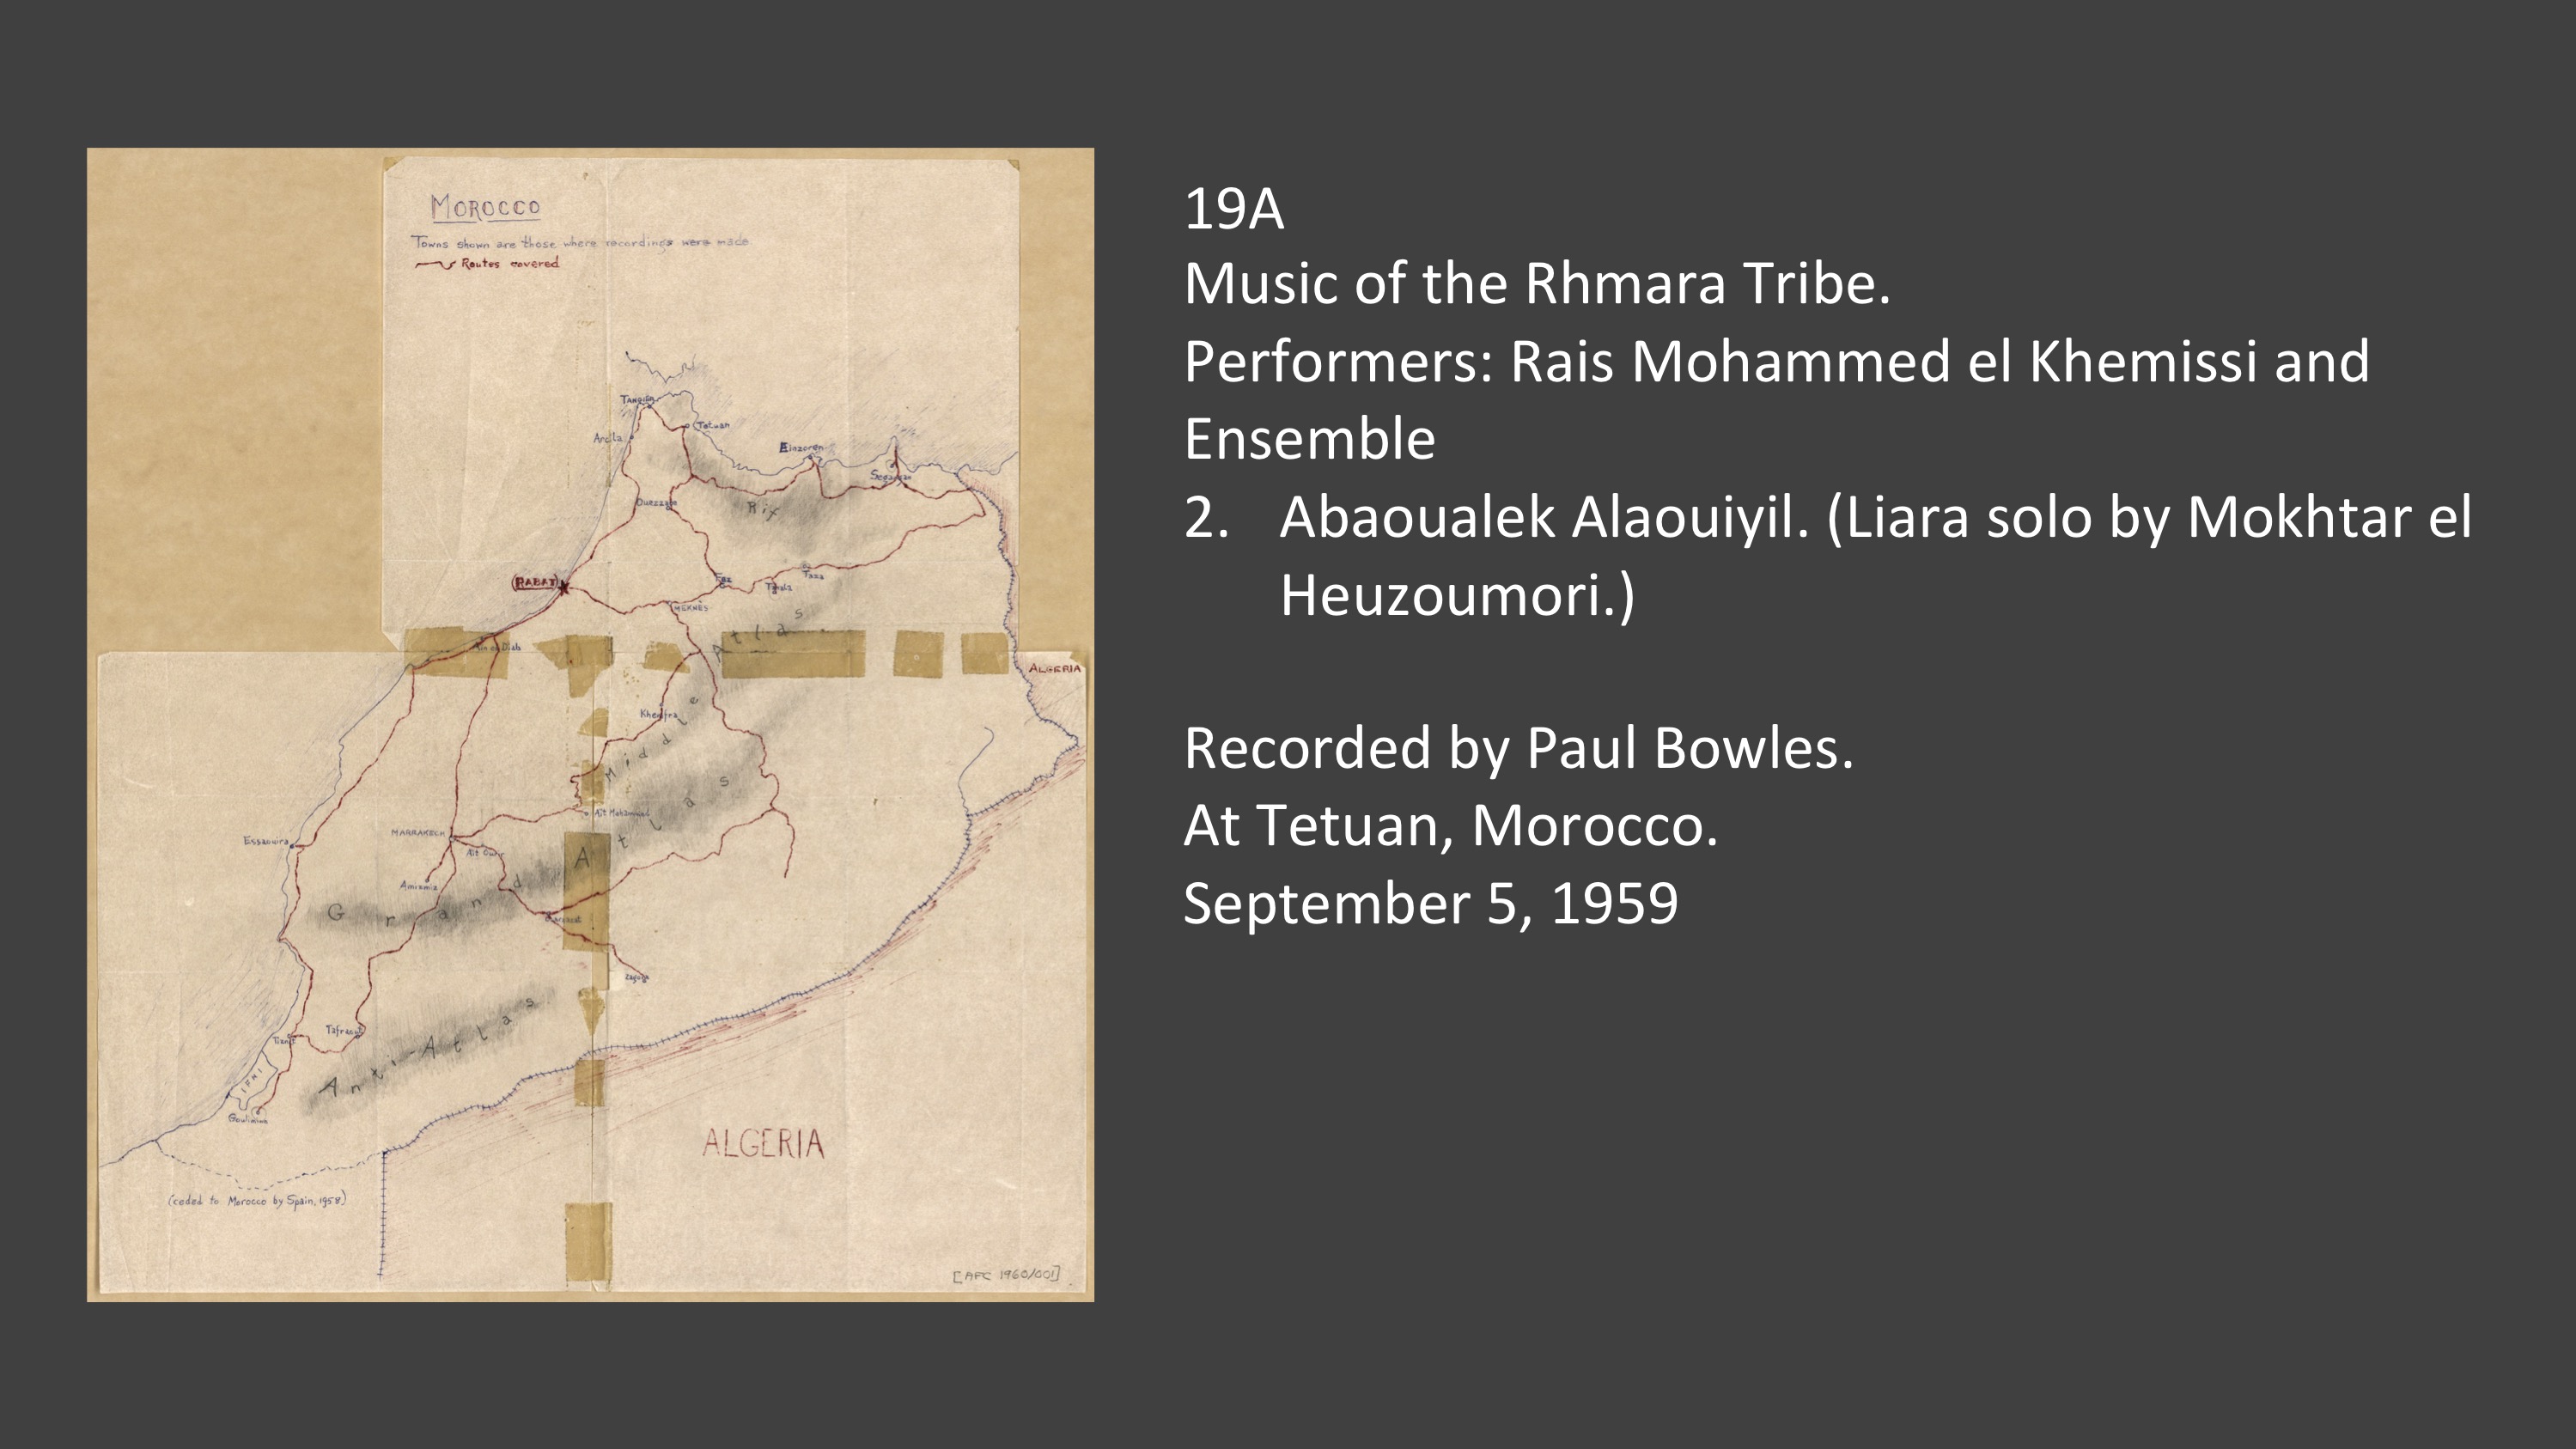 19A 2. Abaoualek Alaouiyil. (Liara solo by Mokhtar el Heuzoumori)
Recorded by Paul Bowles.
At Tetuan, Morocco.
September 5, 1959

